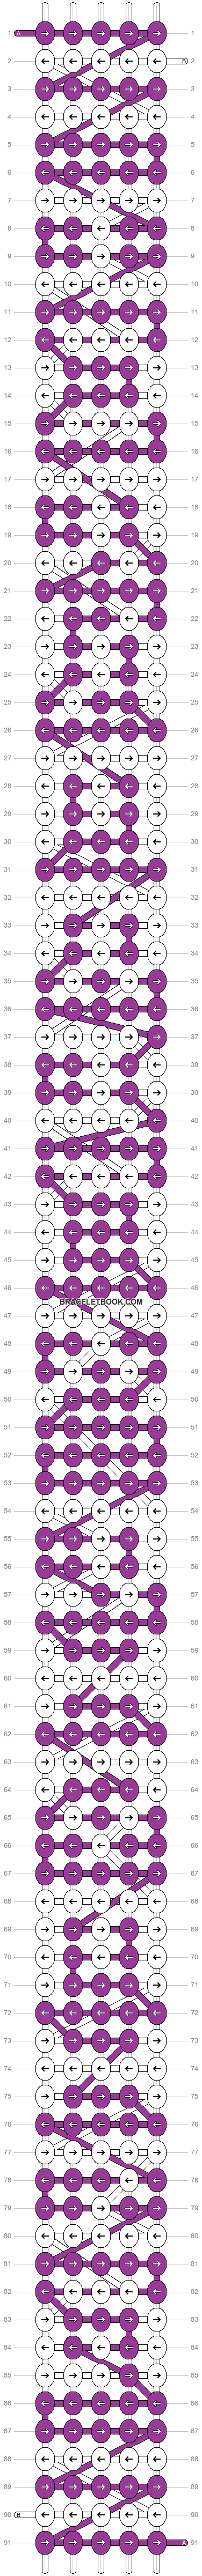 Alpha pattern #1597 variation #66878 pattern